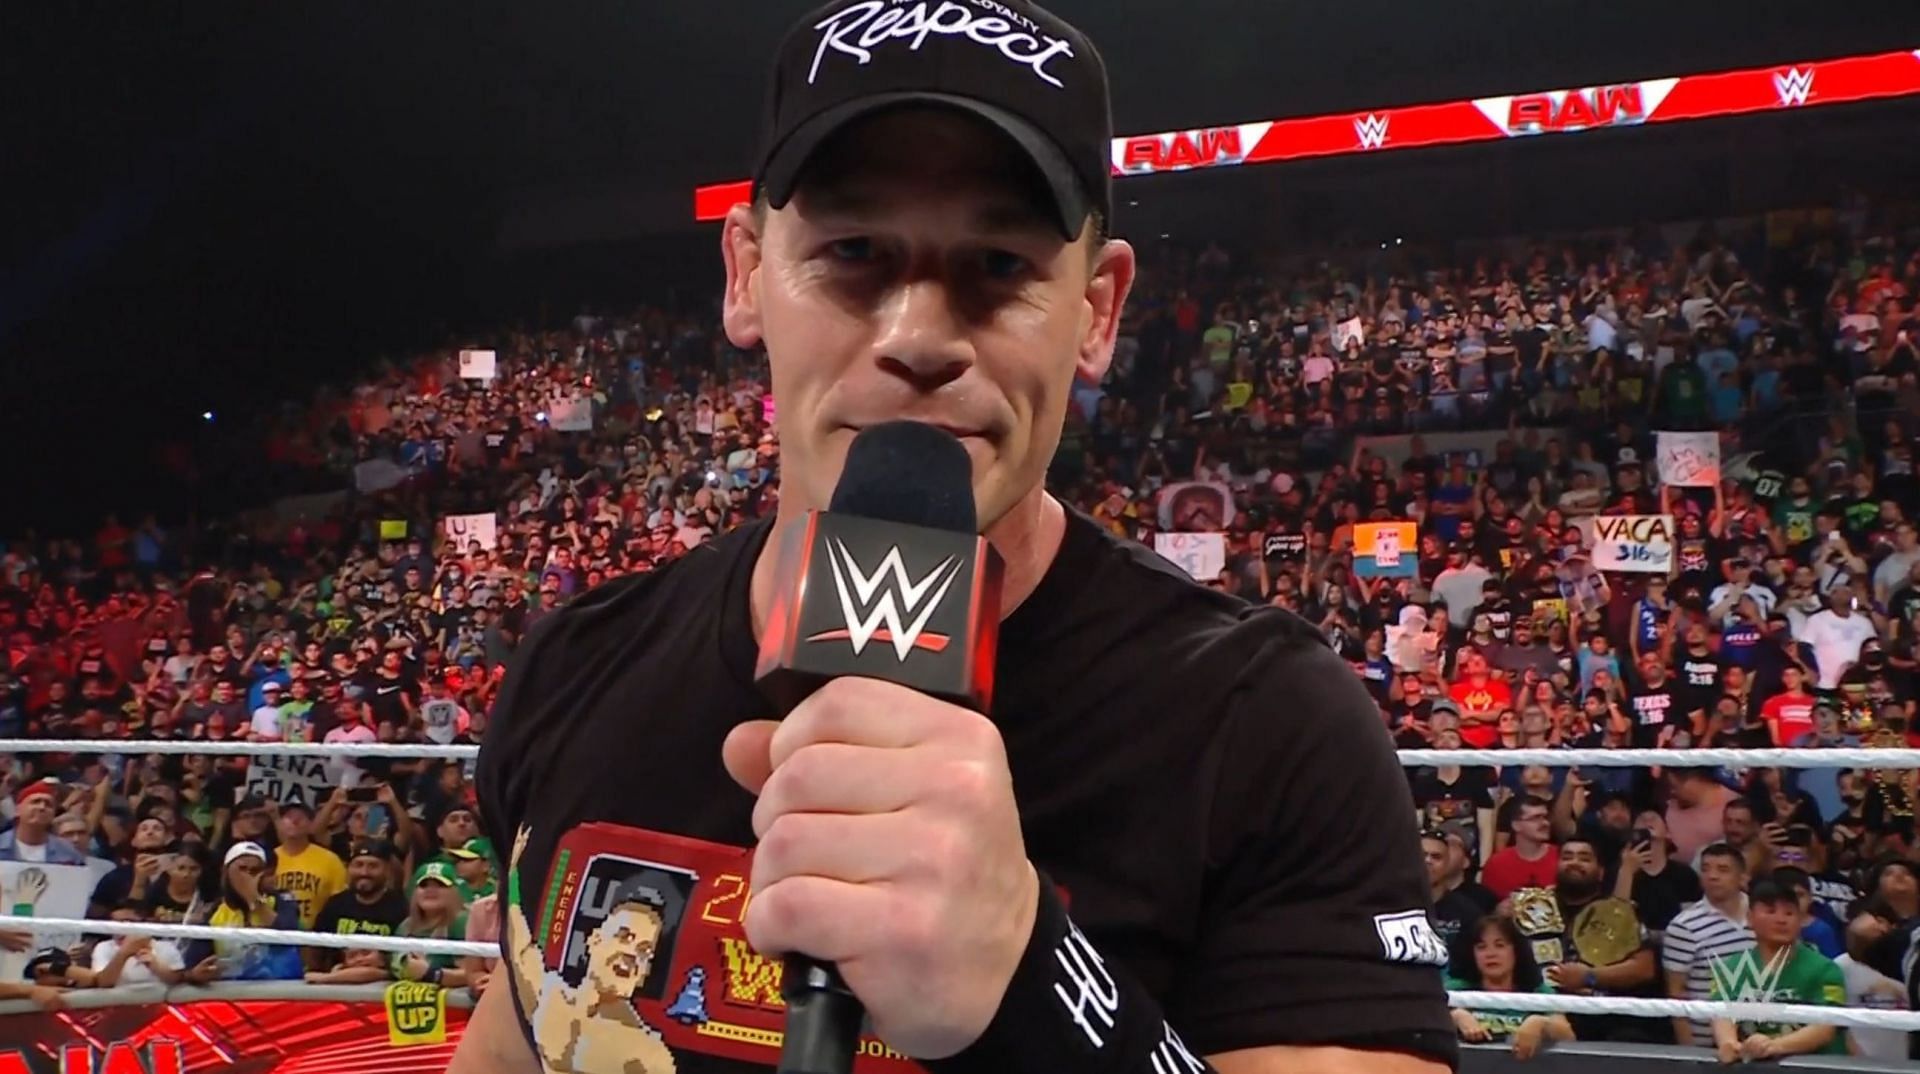 John Cena returned to Monday Night RAW last week